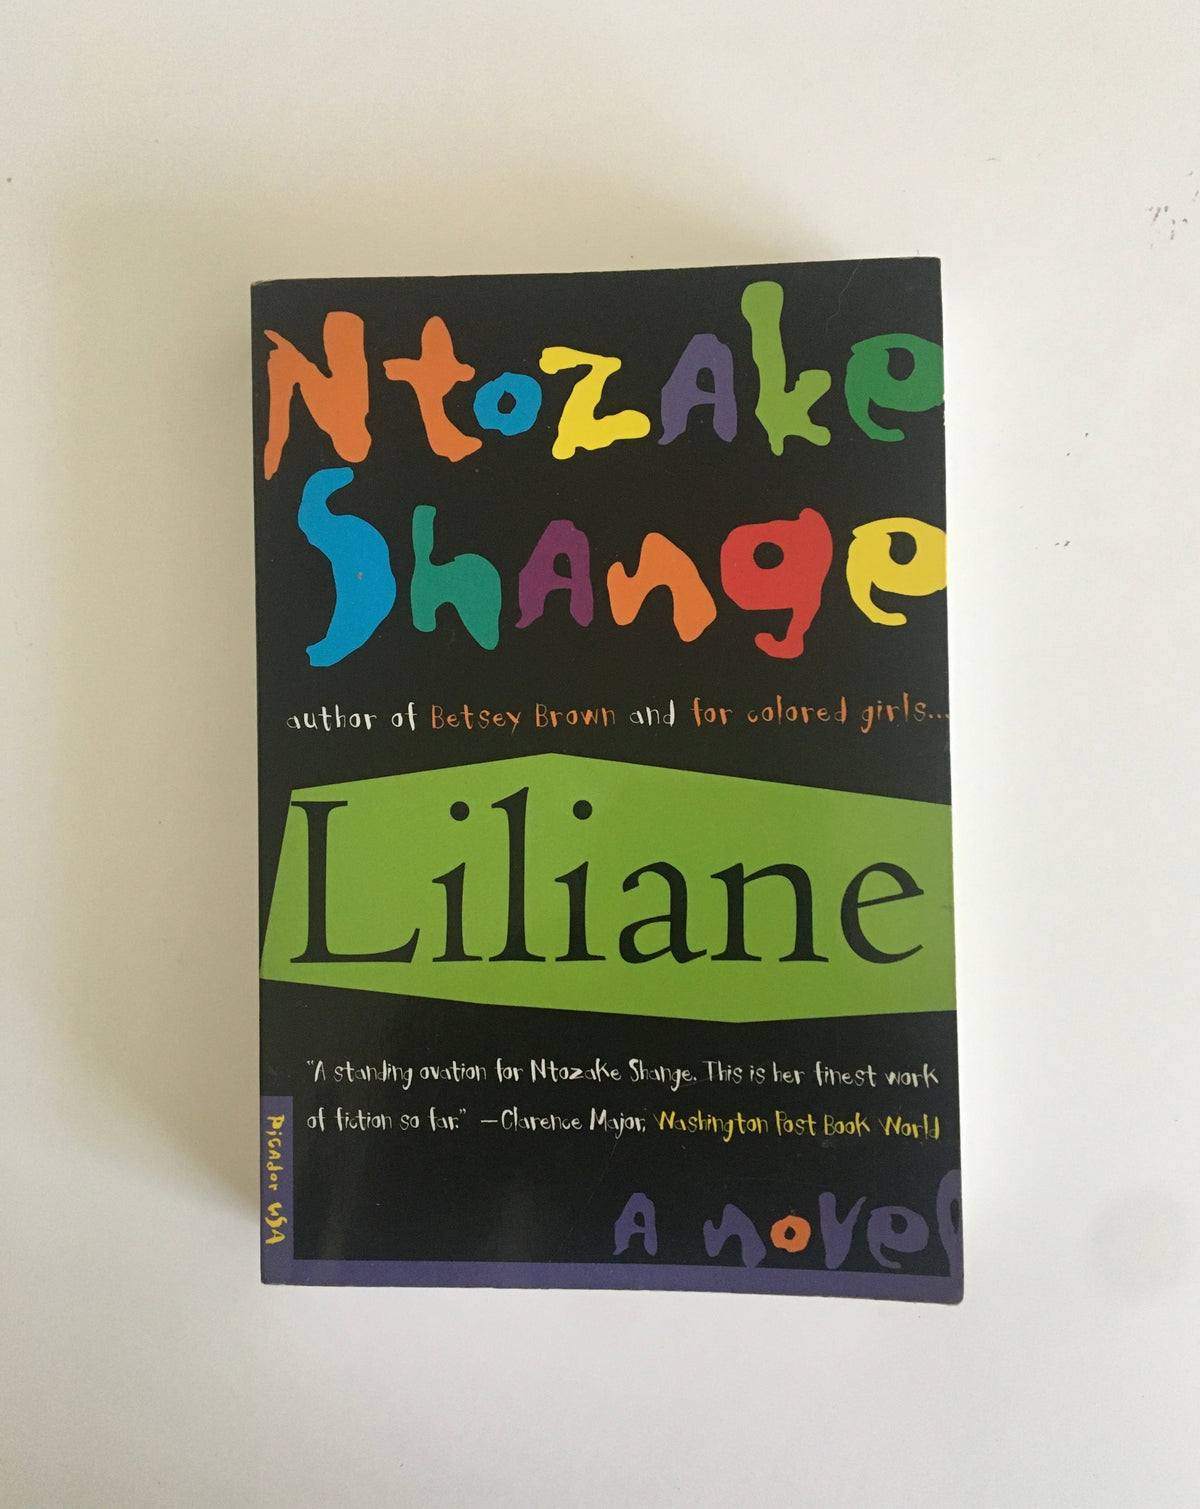 Liliane by Ntozake Shange